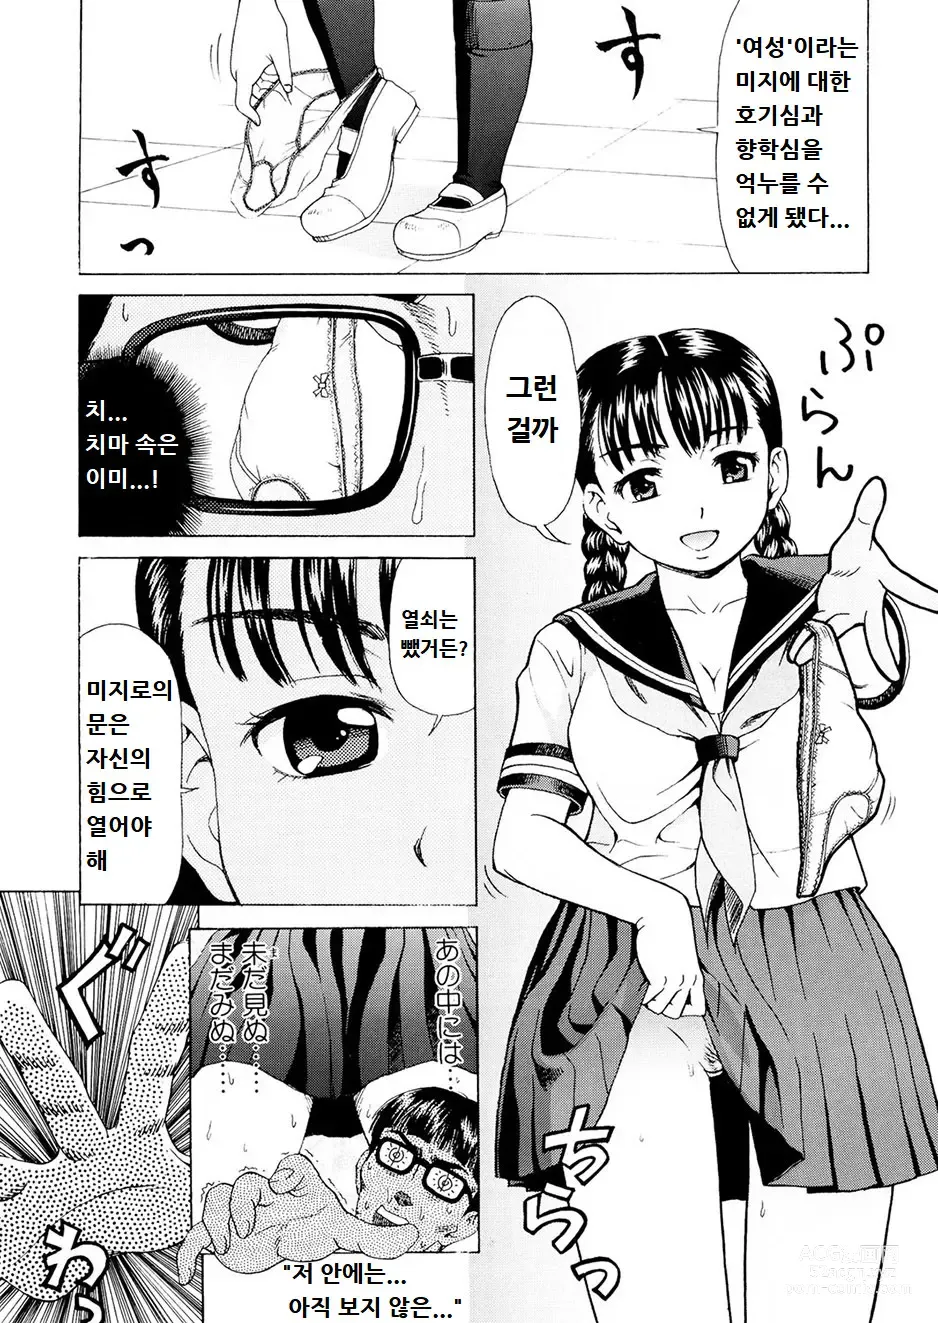 Page 6 of manga 도서실은 방과후의 창관 ~해질녘의 동정군~